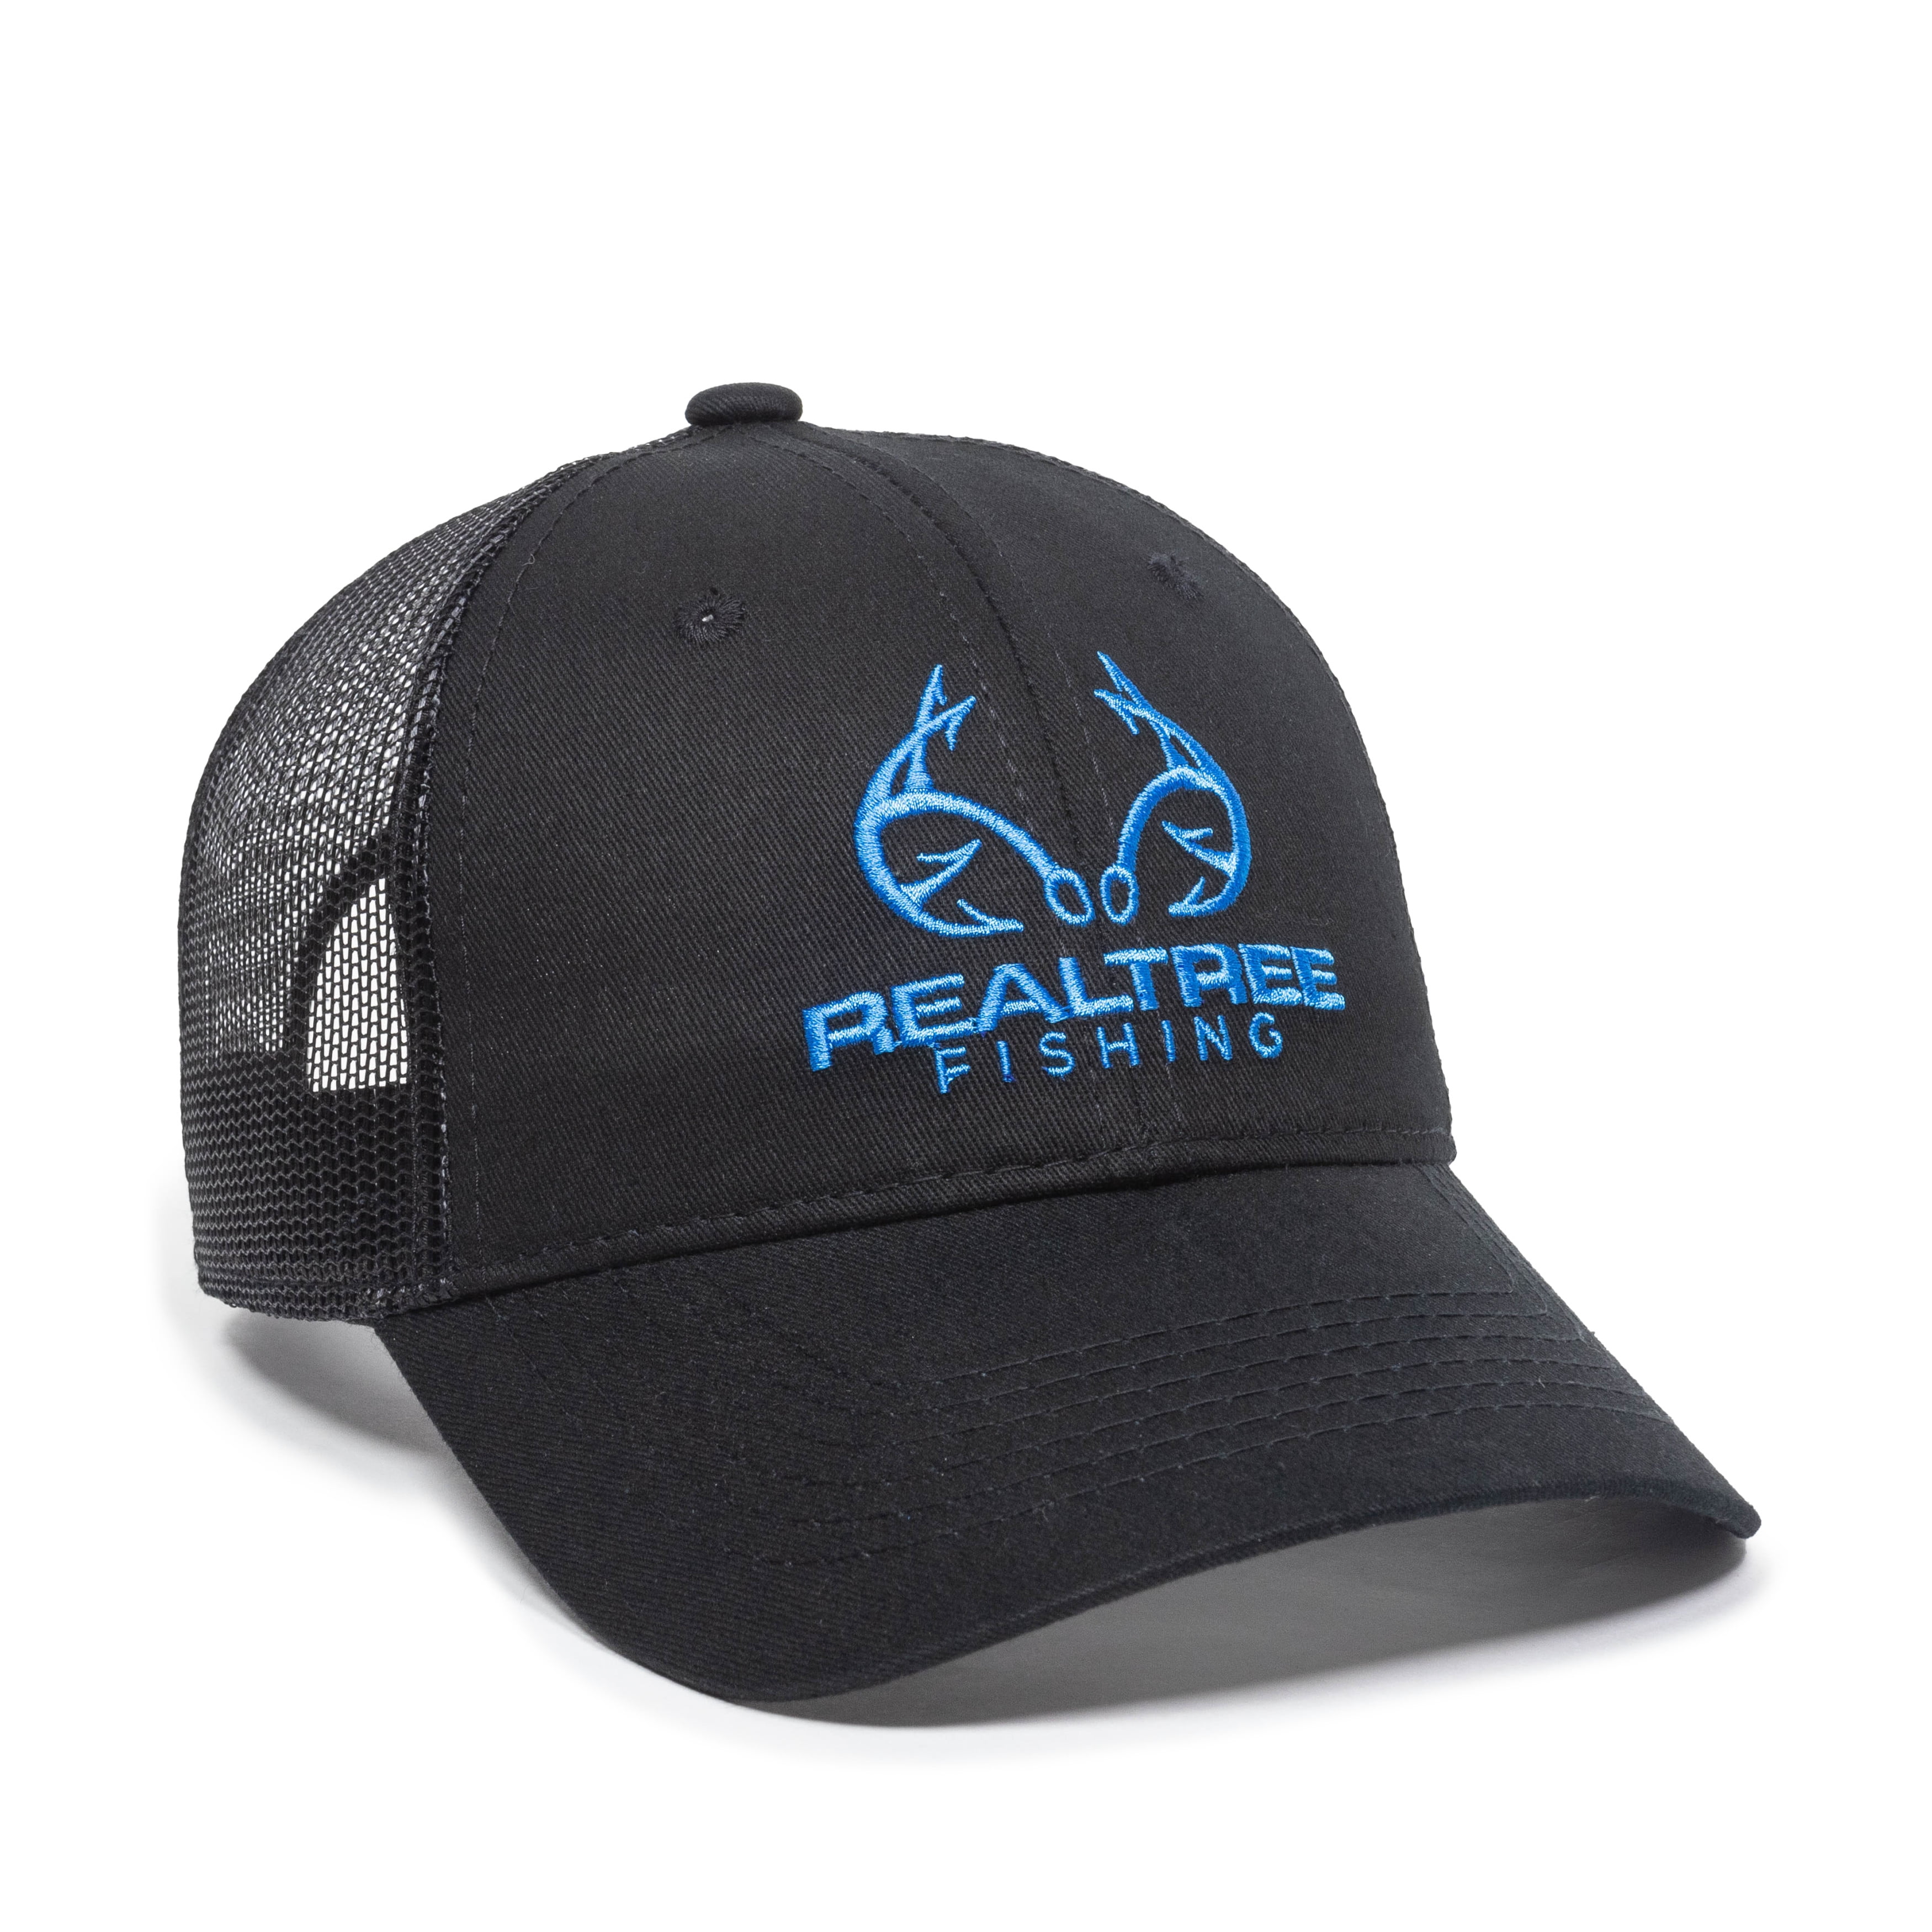 Realtree Fishing Blue/Black Hat Cap